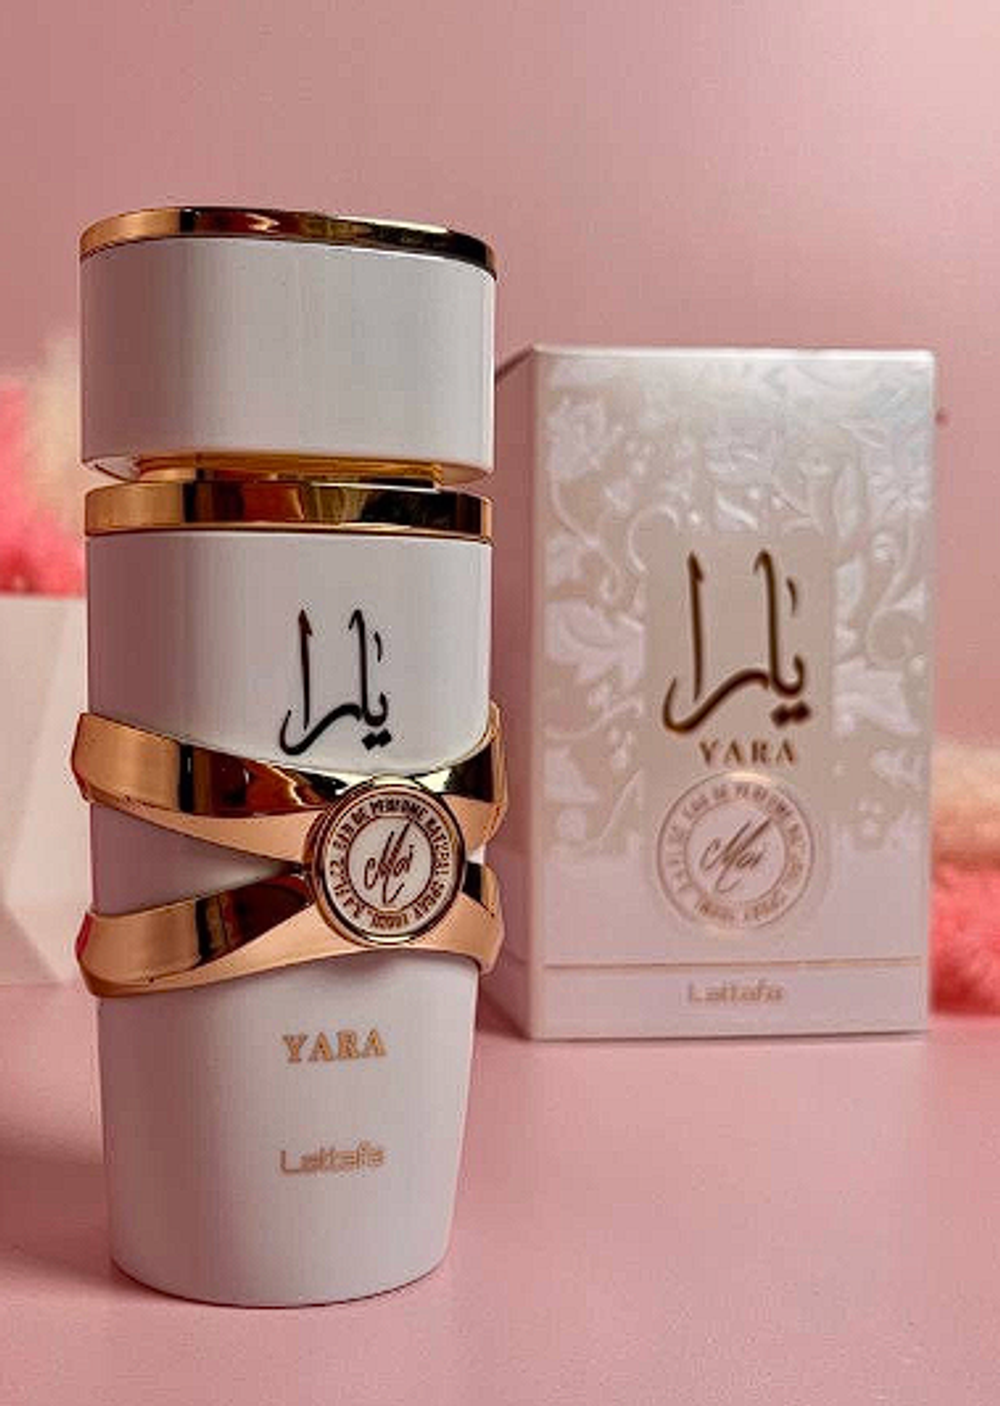 Yara Moi Lattafa Perfumes 100 ml (duty free парфюмерия)